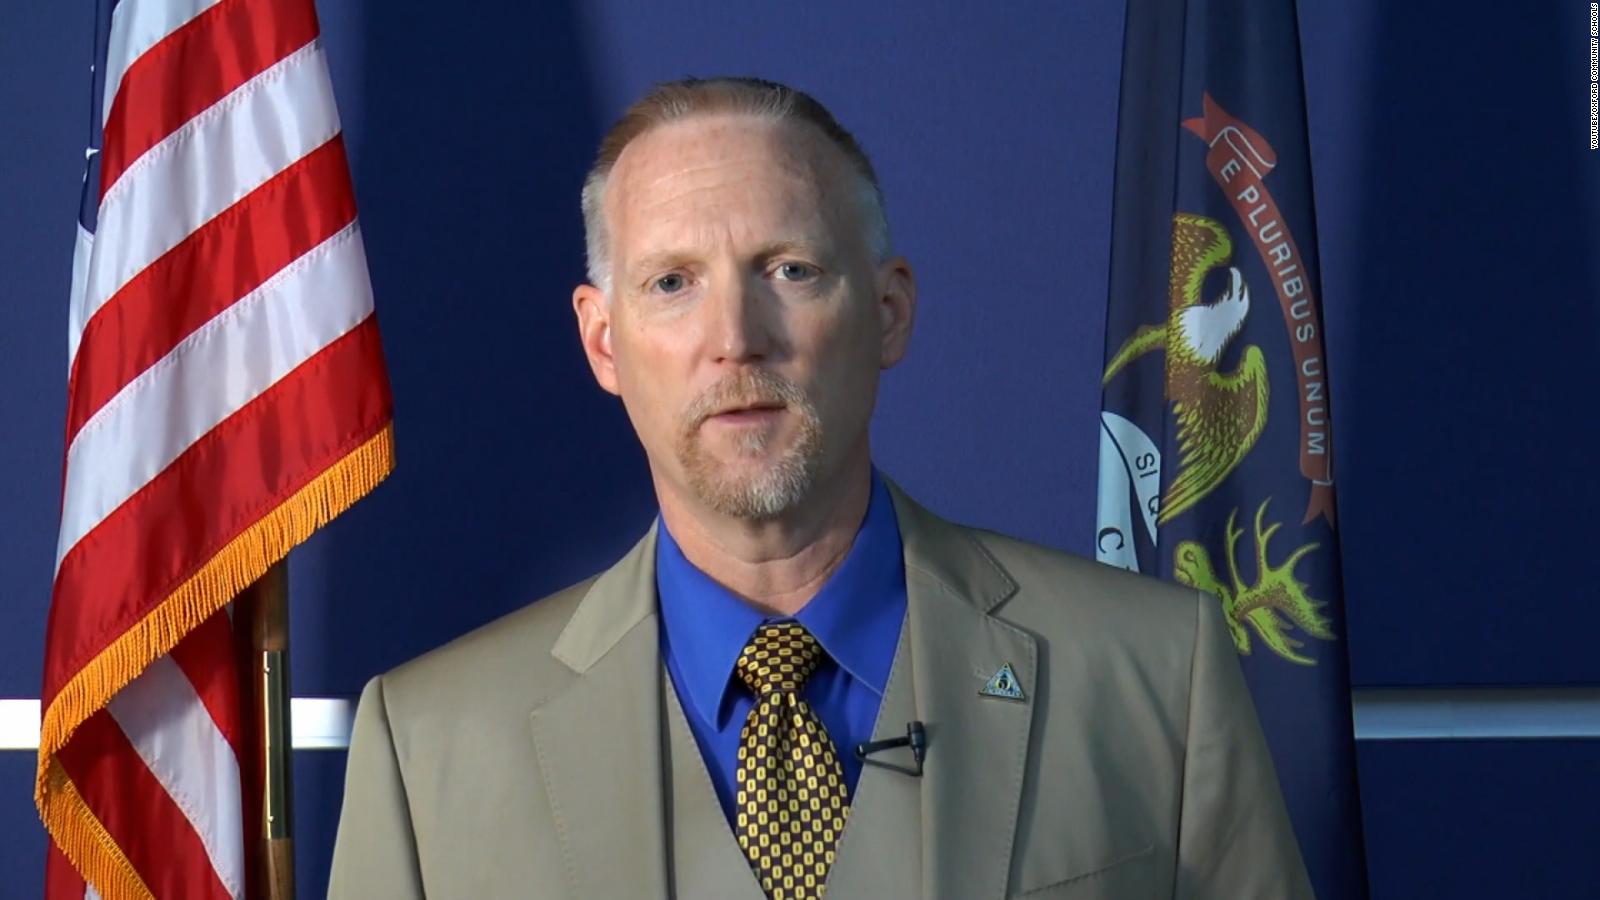 Superintendent Tim Throne addresses his community via YouTube.